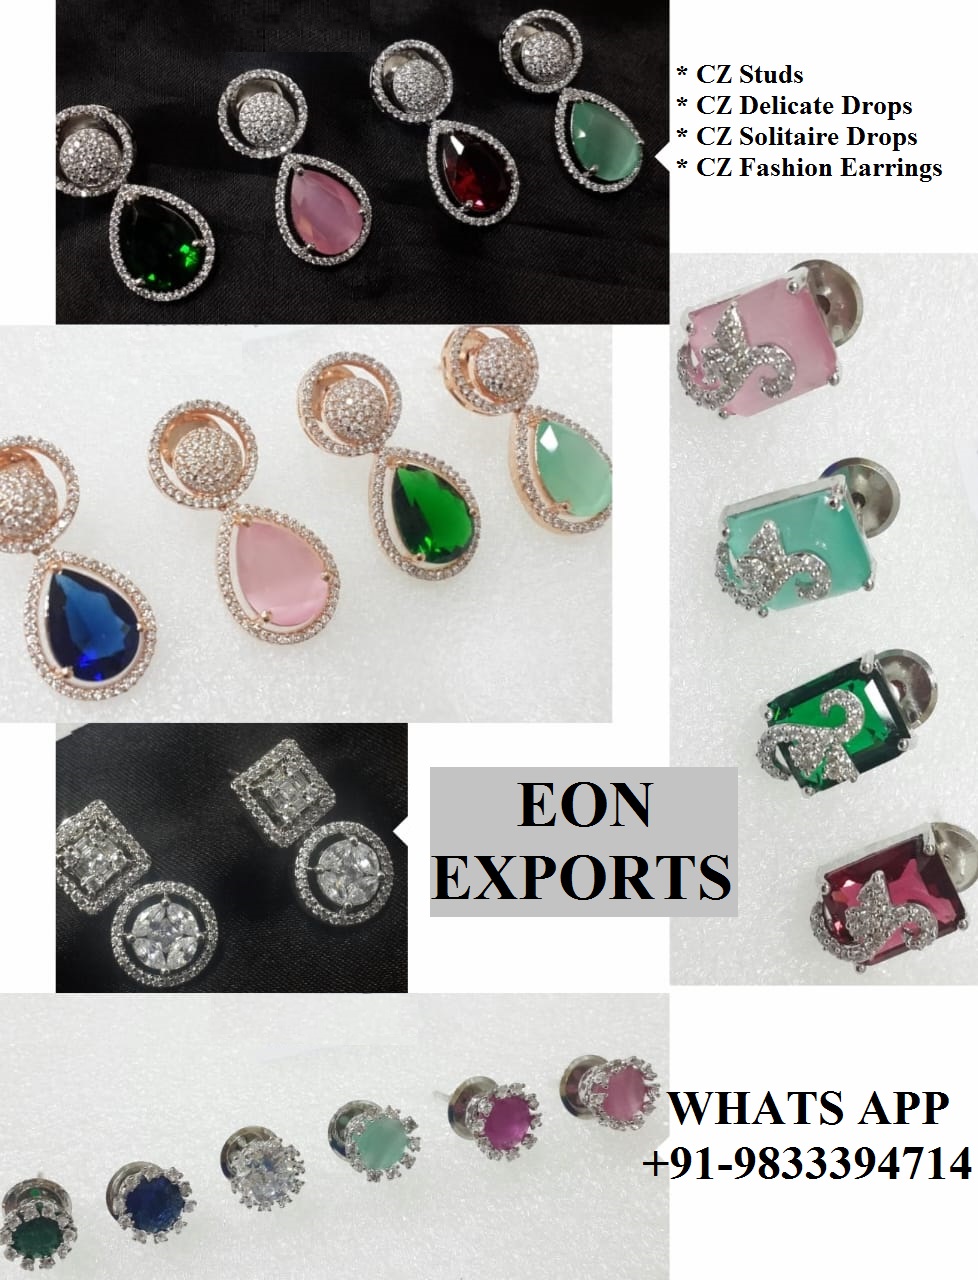 Imitation Jewellery Manufacturers Suppliers in Kolkata